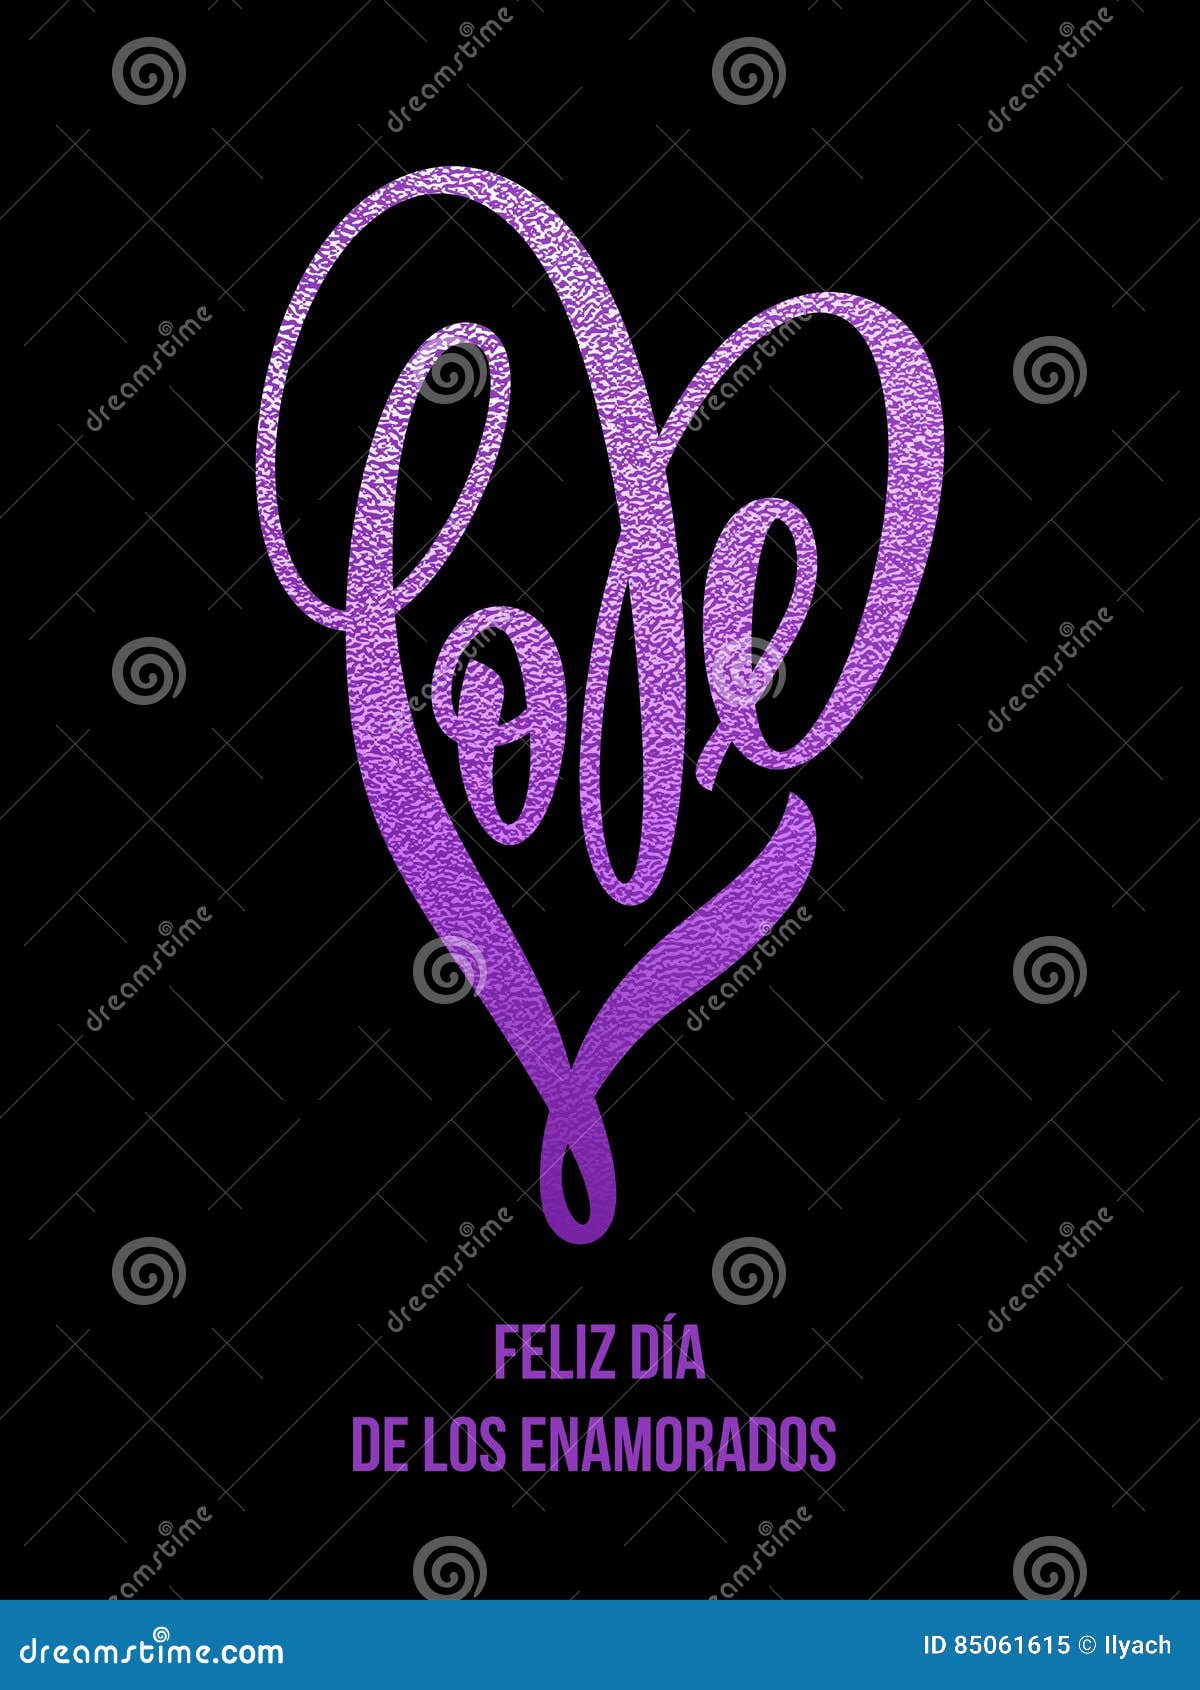 FELIZ DIA DE LOS ENAMORADOS HANDMADE SPANISH GREETING CARD-VALENTINE'S DAY